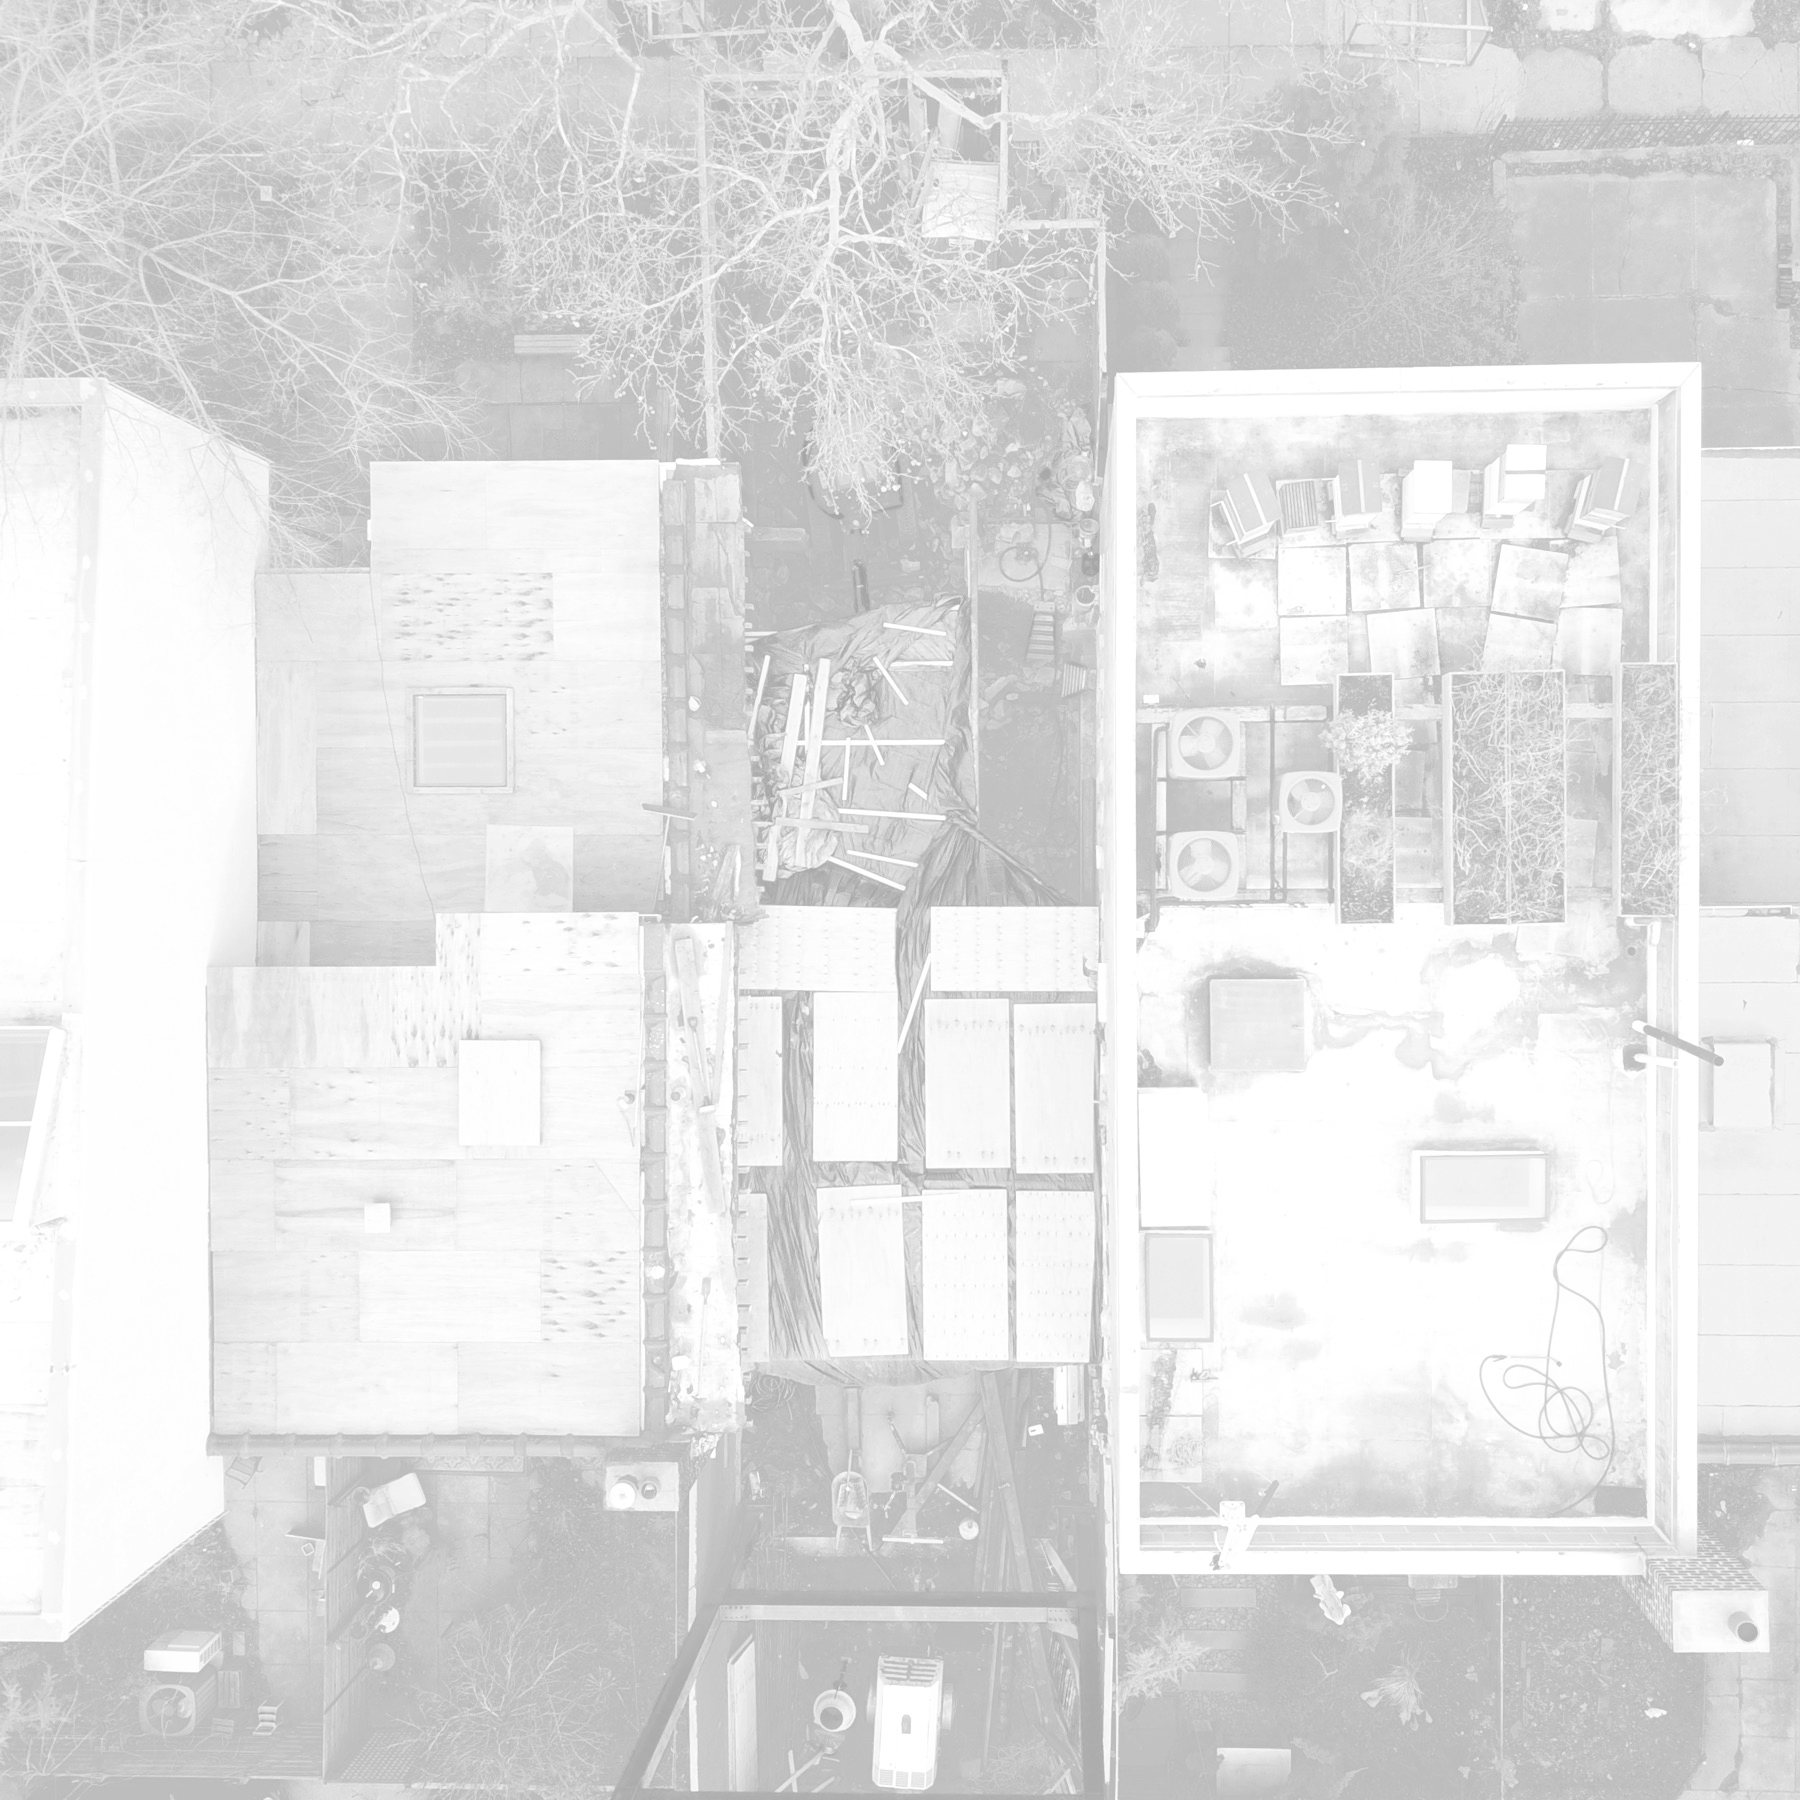 Williamsburg Townhouse drone pic (Copy) (Copy)